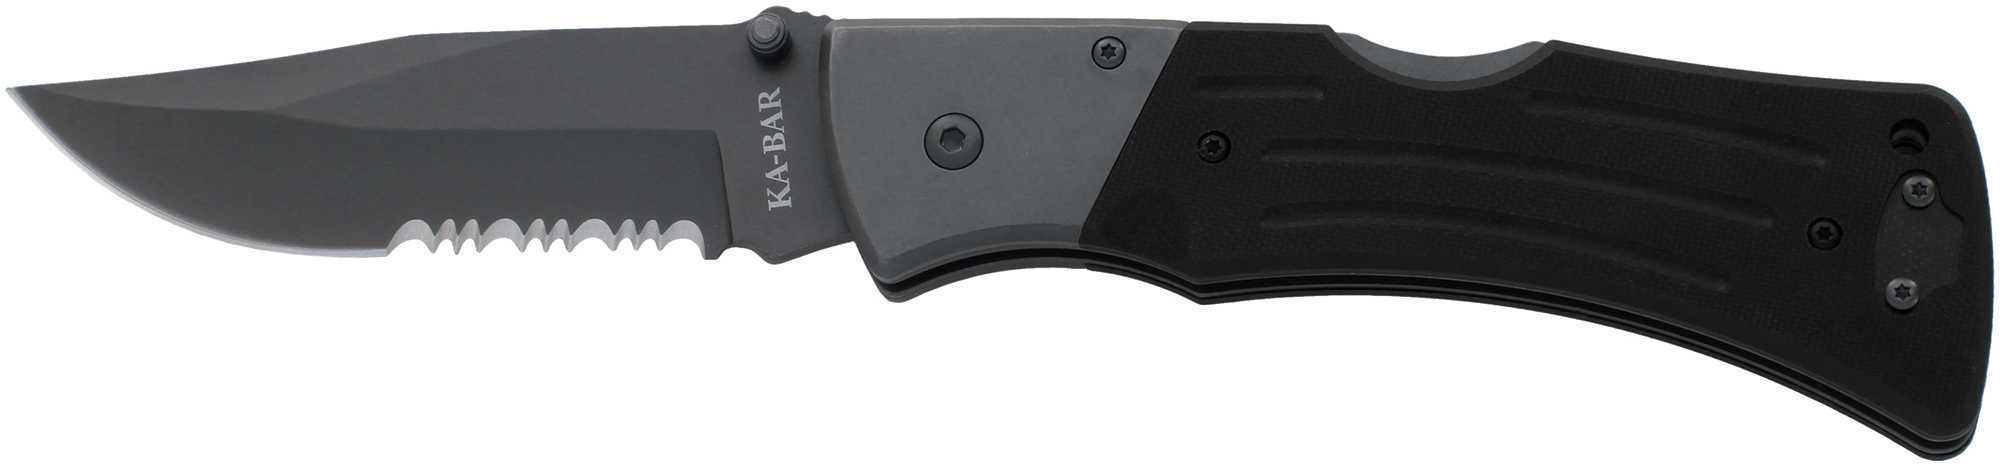 Ka-Bar G10 Mule Folder Clip Blade, Serrated Edge M Knife D: 2-3063-9